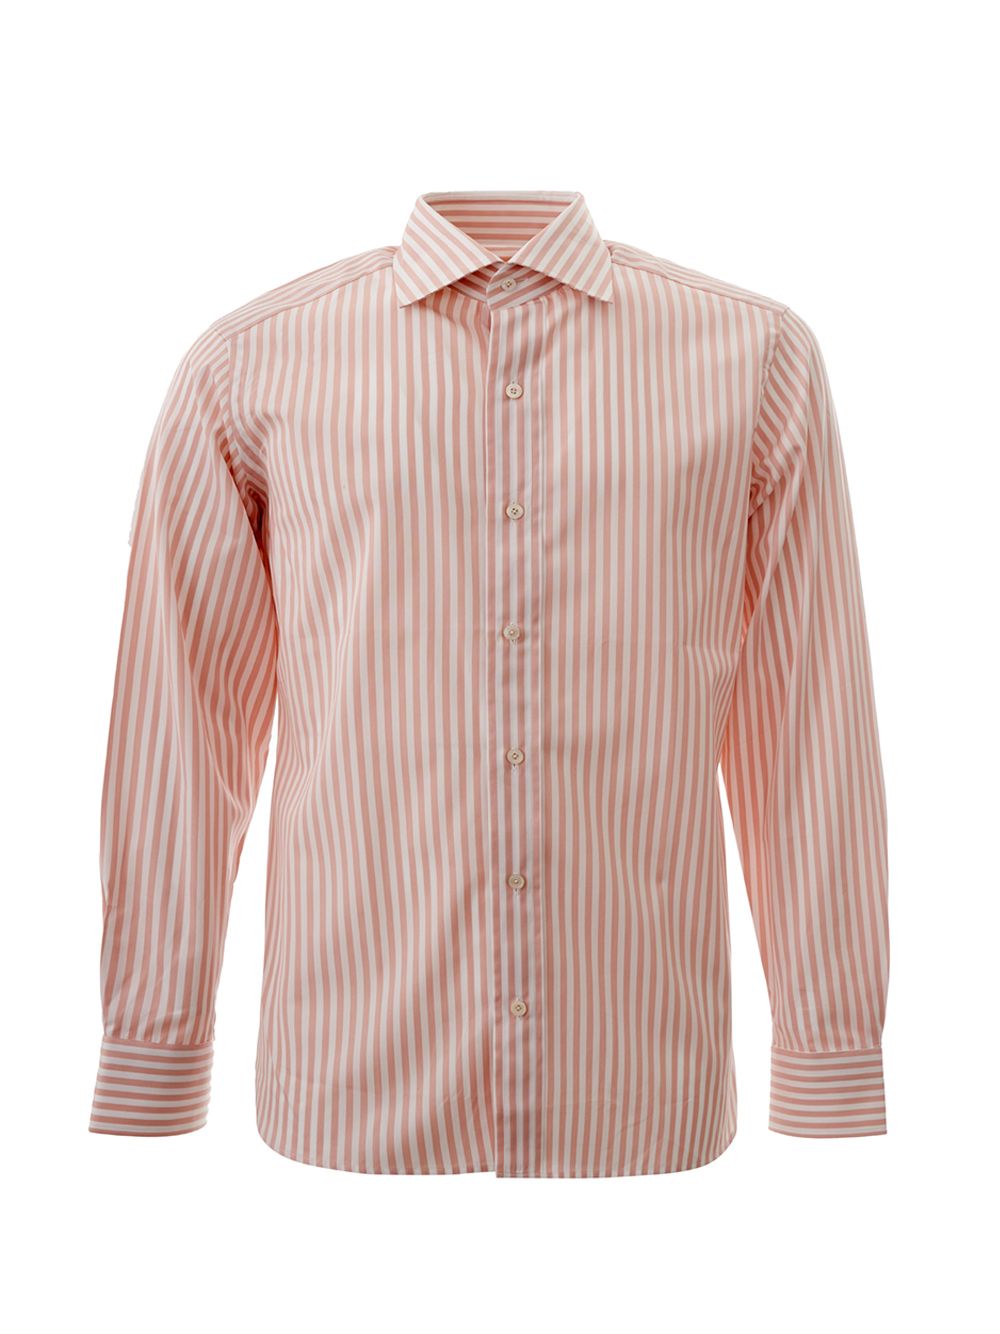 Tom Ford Pink Striped Regular Fit Shirt